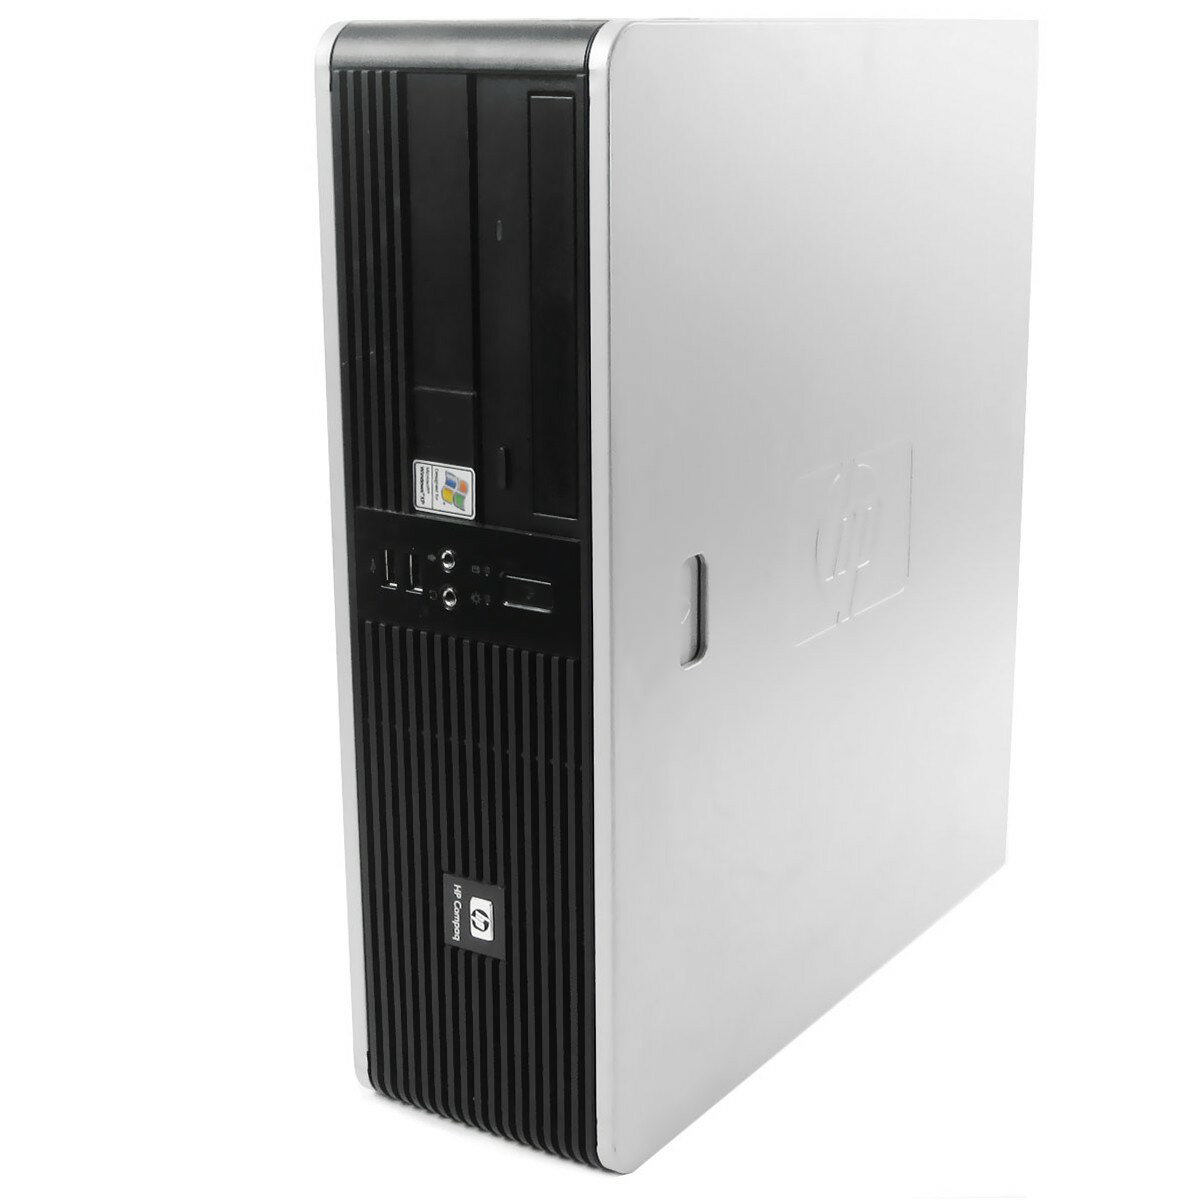 Windows XP Pro HP Compaq dc5750 SFF Athlon64X2 4600+ 2.40GHz 4GB 320GB DVD リカバリ領域有 中古パソコン デスクトップ